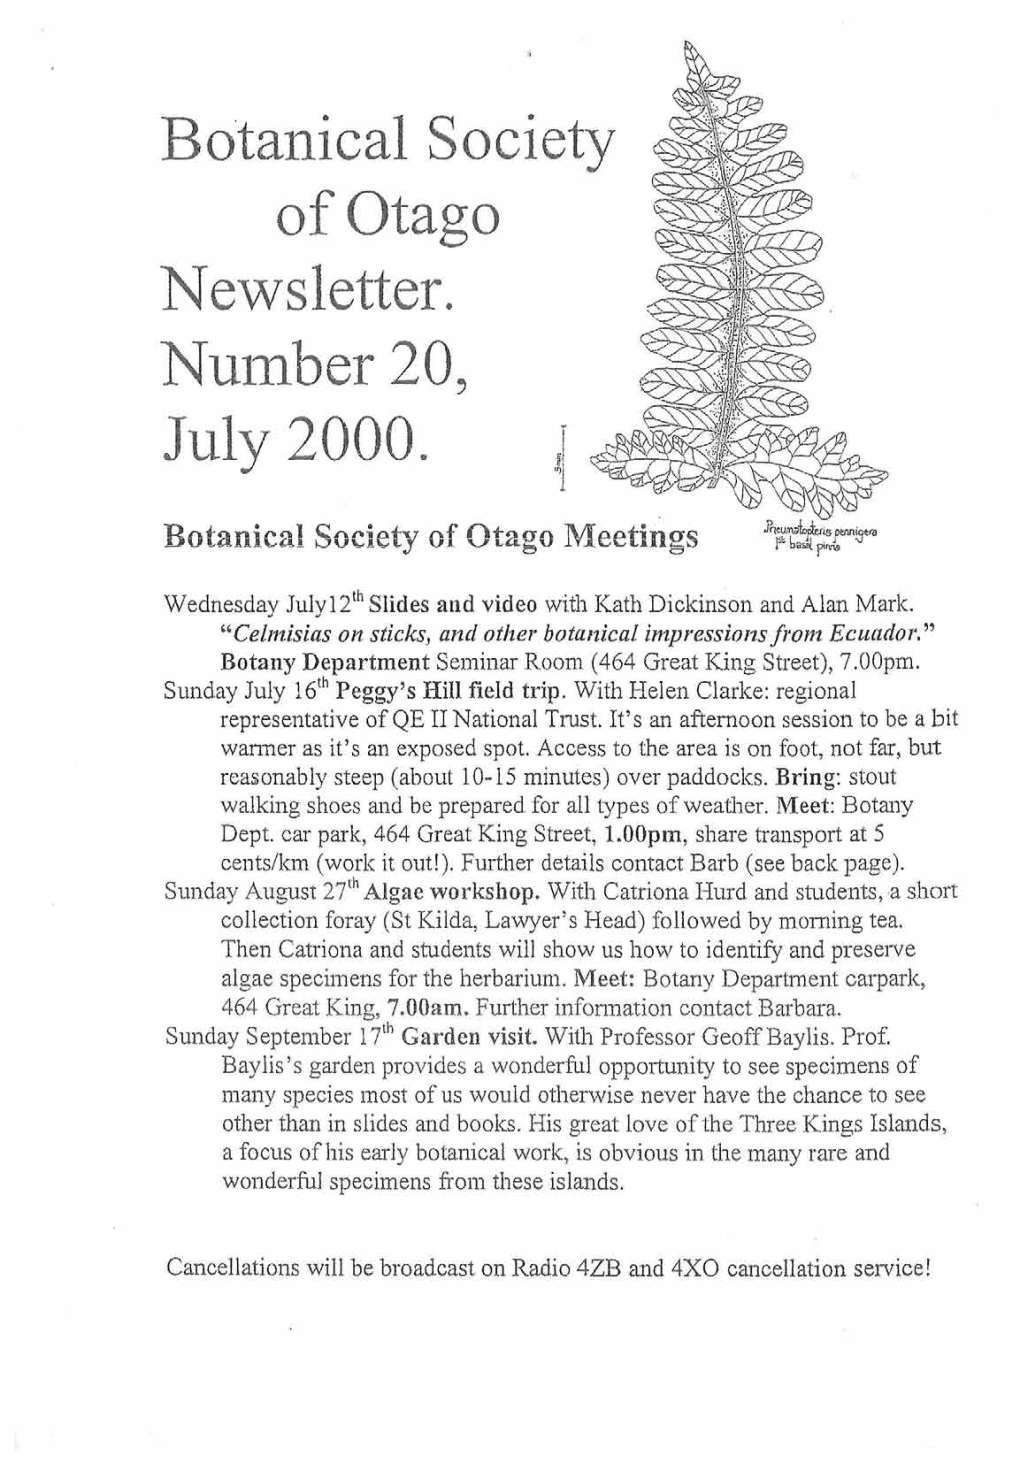 Botanical Society of Otago Newsletter. Number 20, July 2000. Botanical Society of Otago Meetings